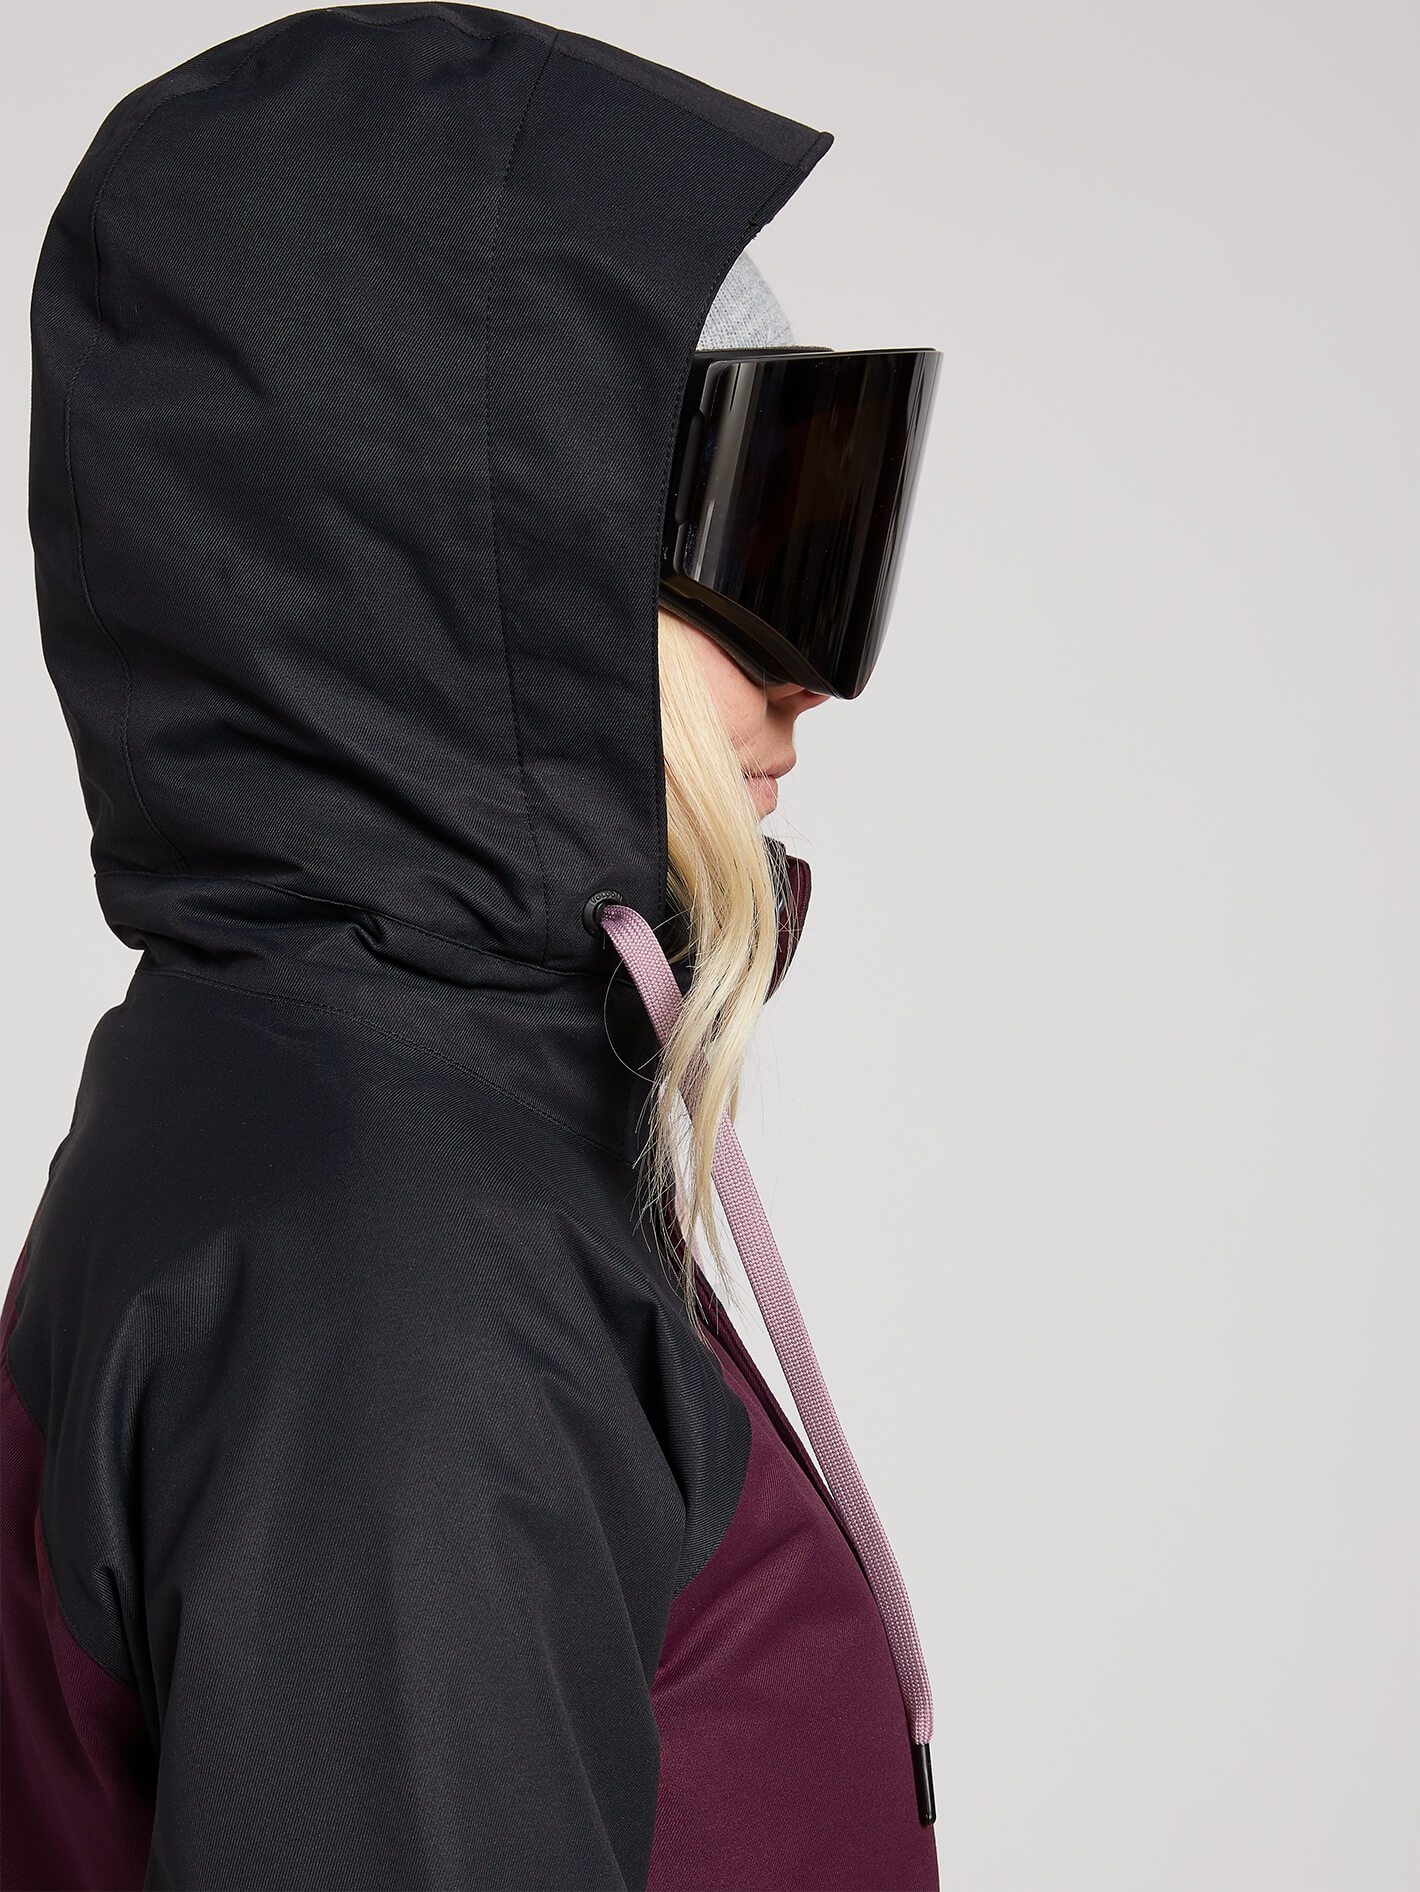 Brand New Womens 2020 Volcom Westland Insulated Snow Jacket Merlot